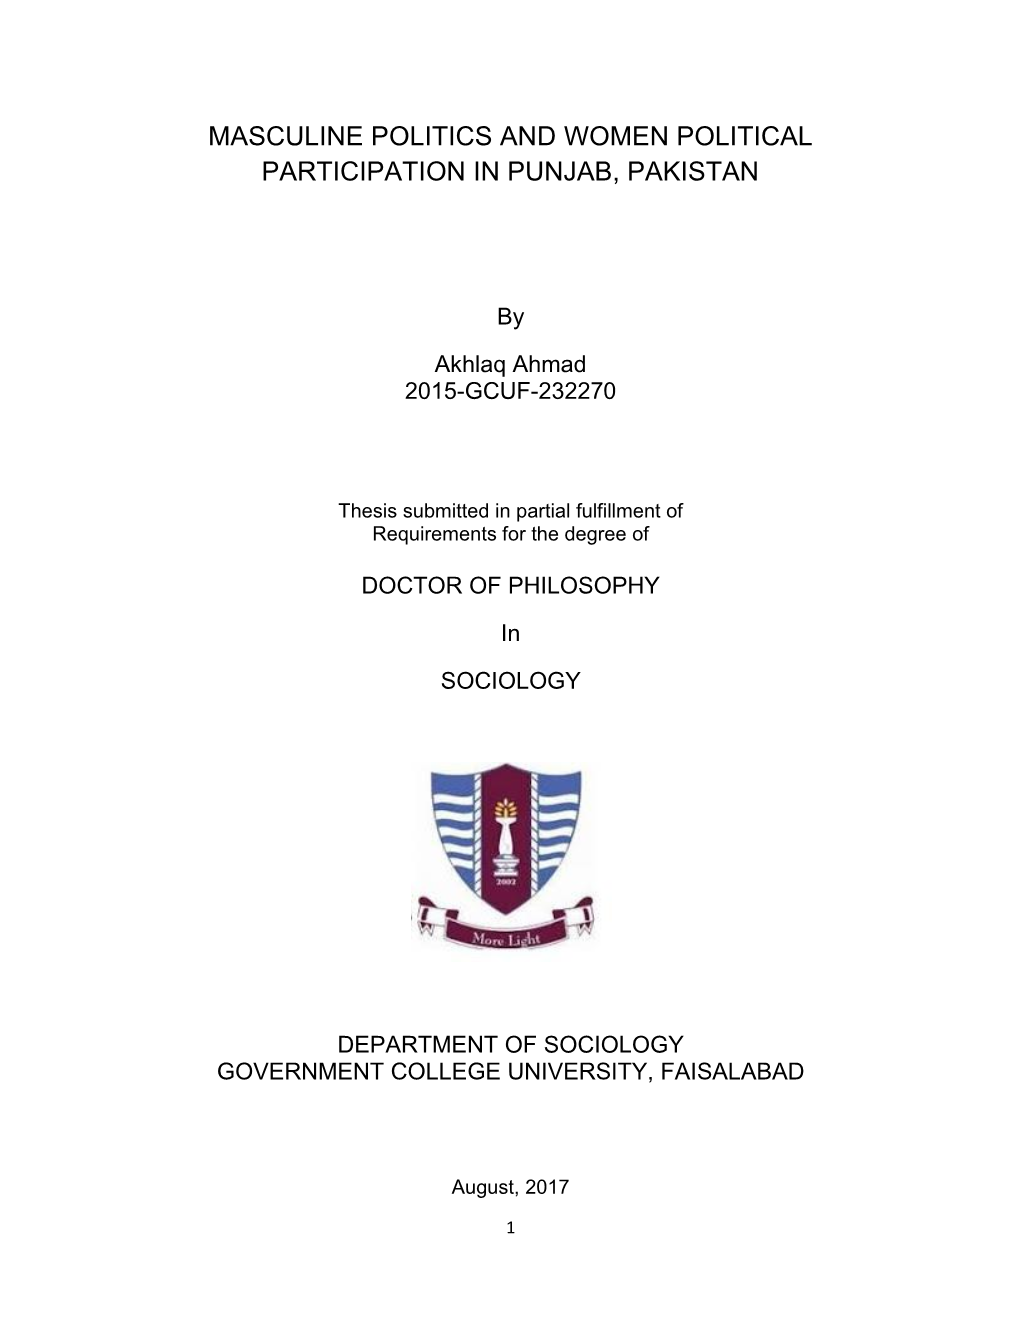 Masculine Politics and Women Political Participation in Punjab, Pakistan